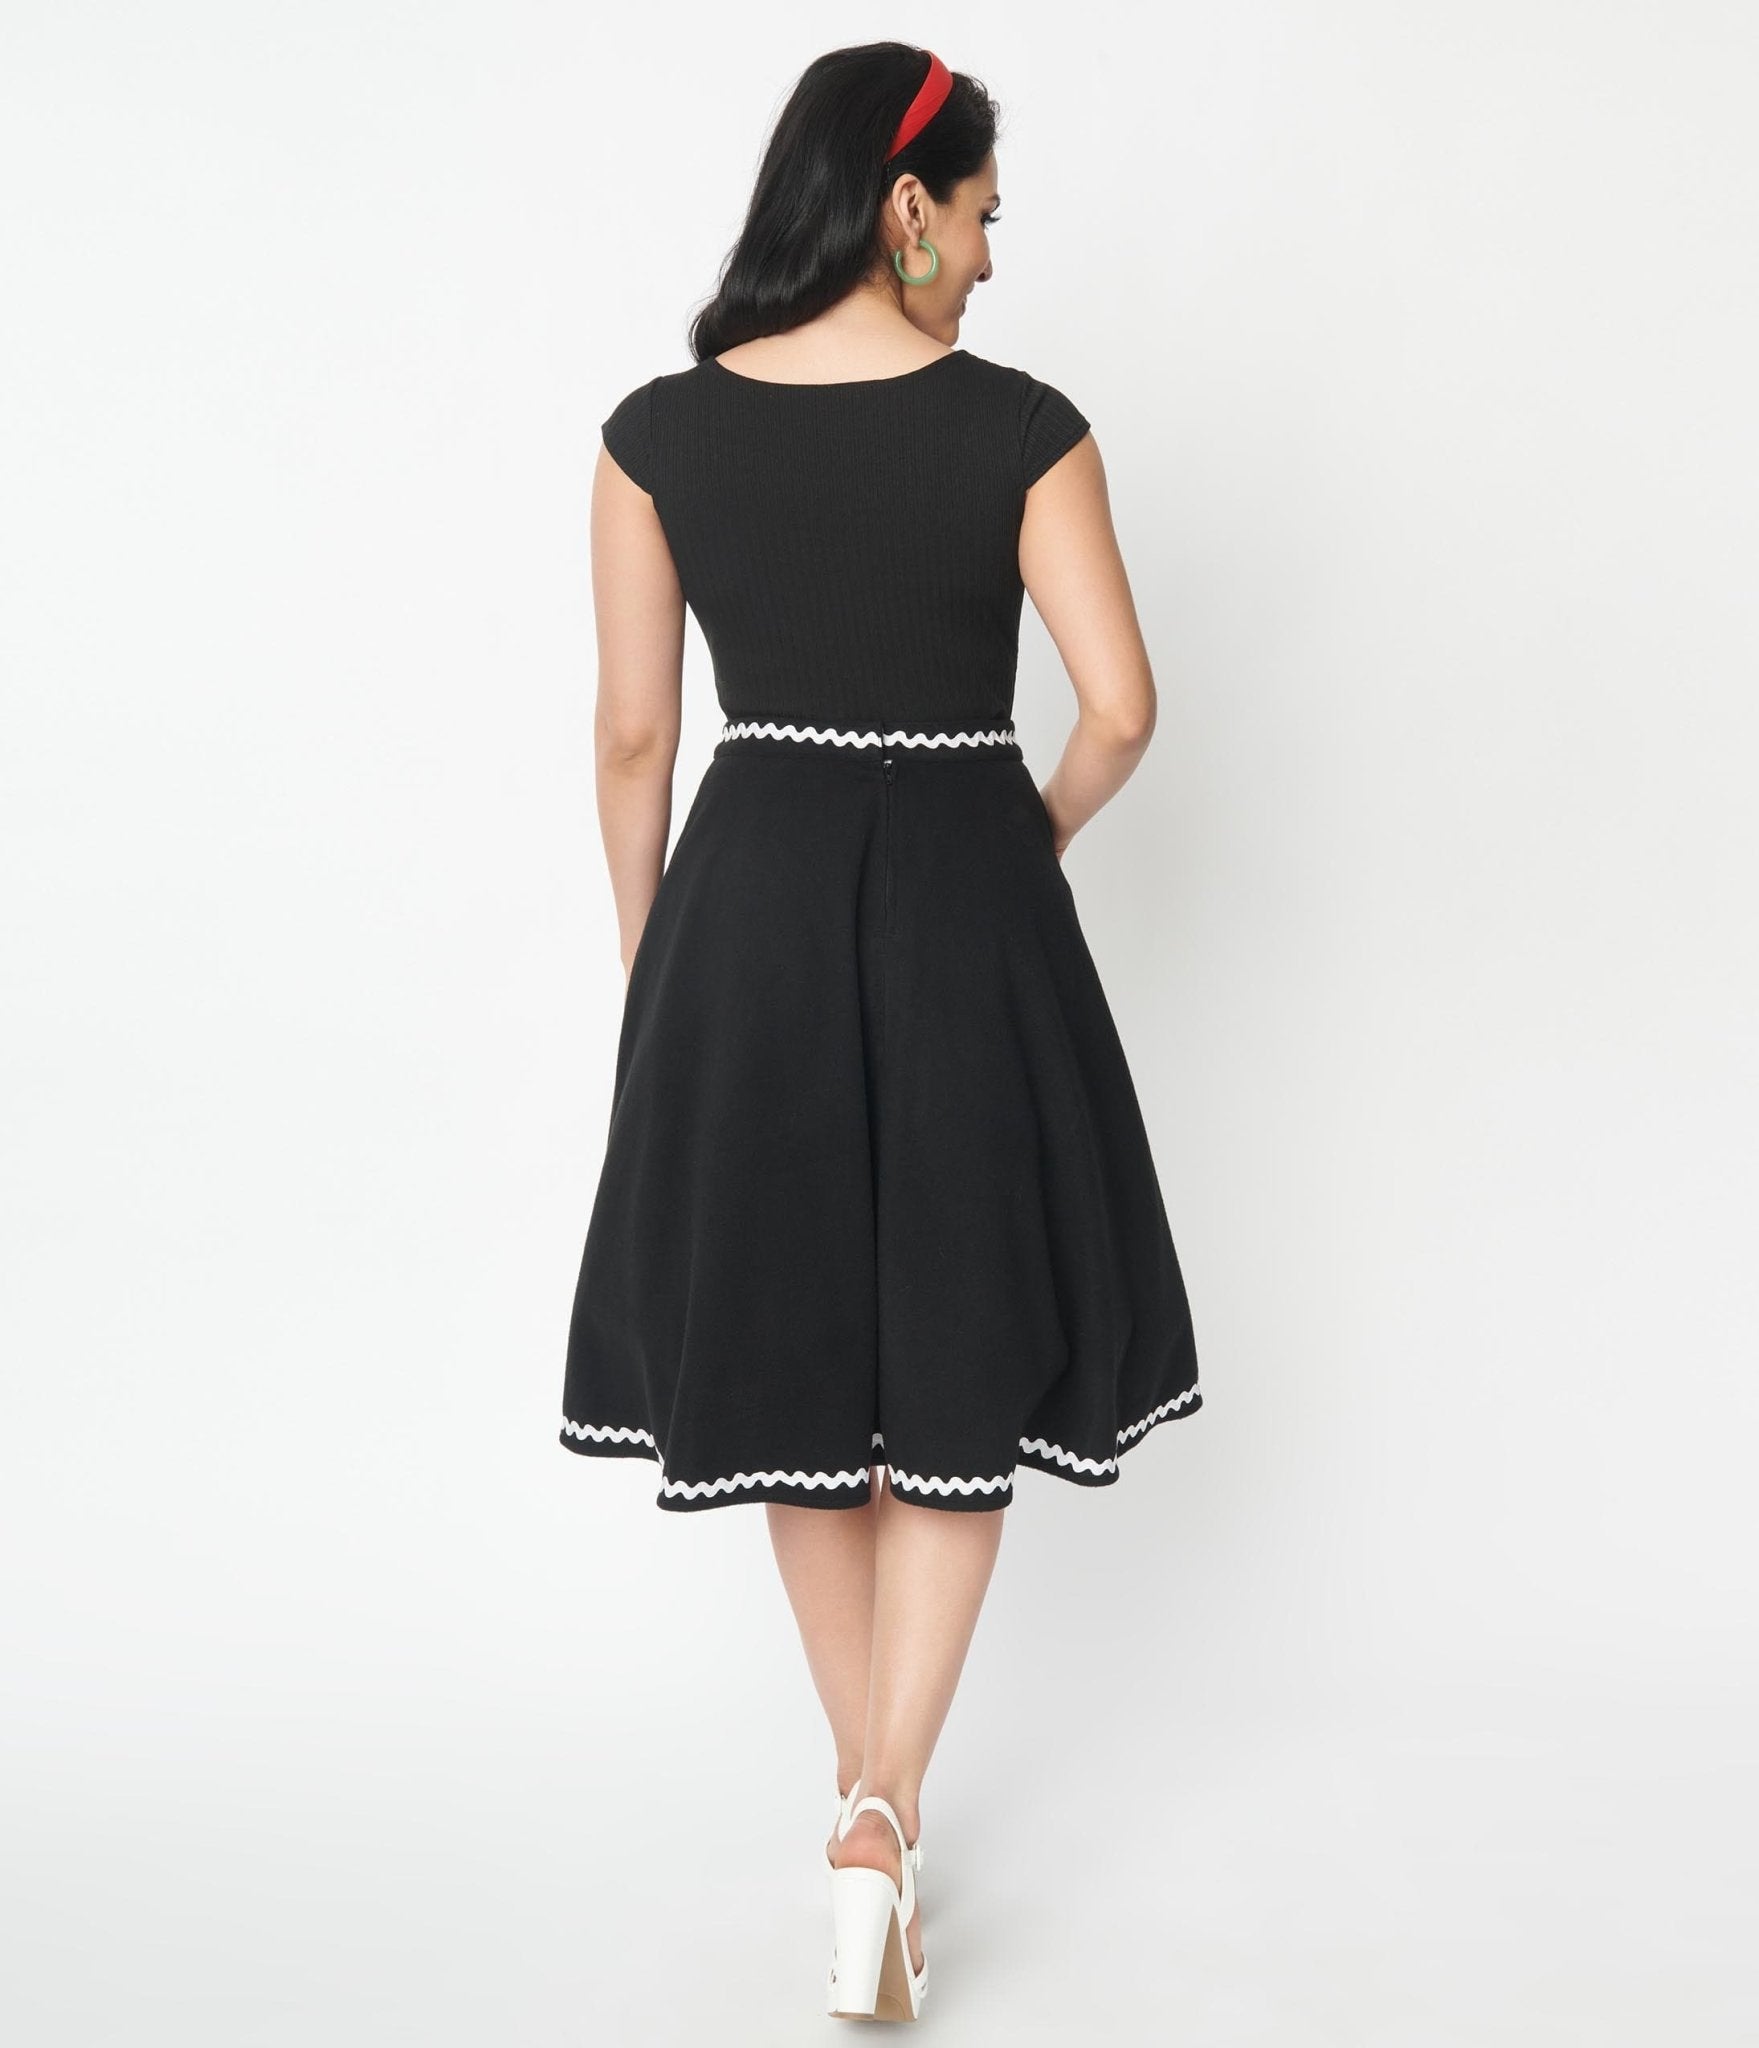 Unique Vintage Black June-O-Ween Strawberry Swing Skirt - Unique Vintage - Womens, BOTTOMS, SKIRTS